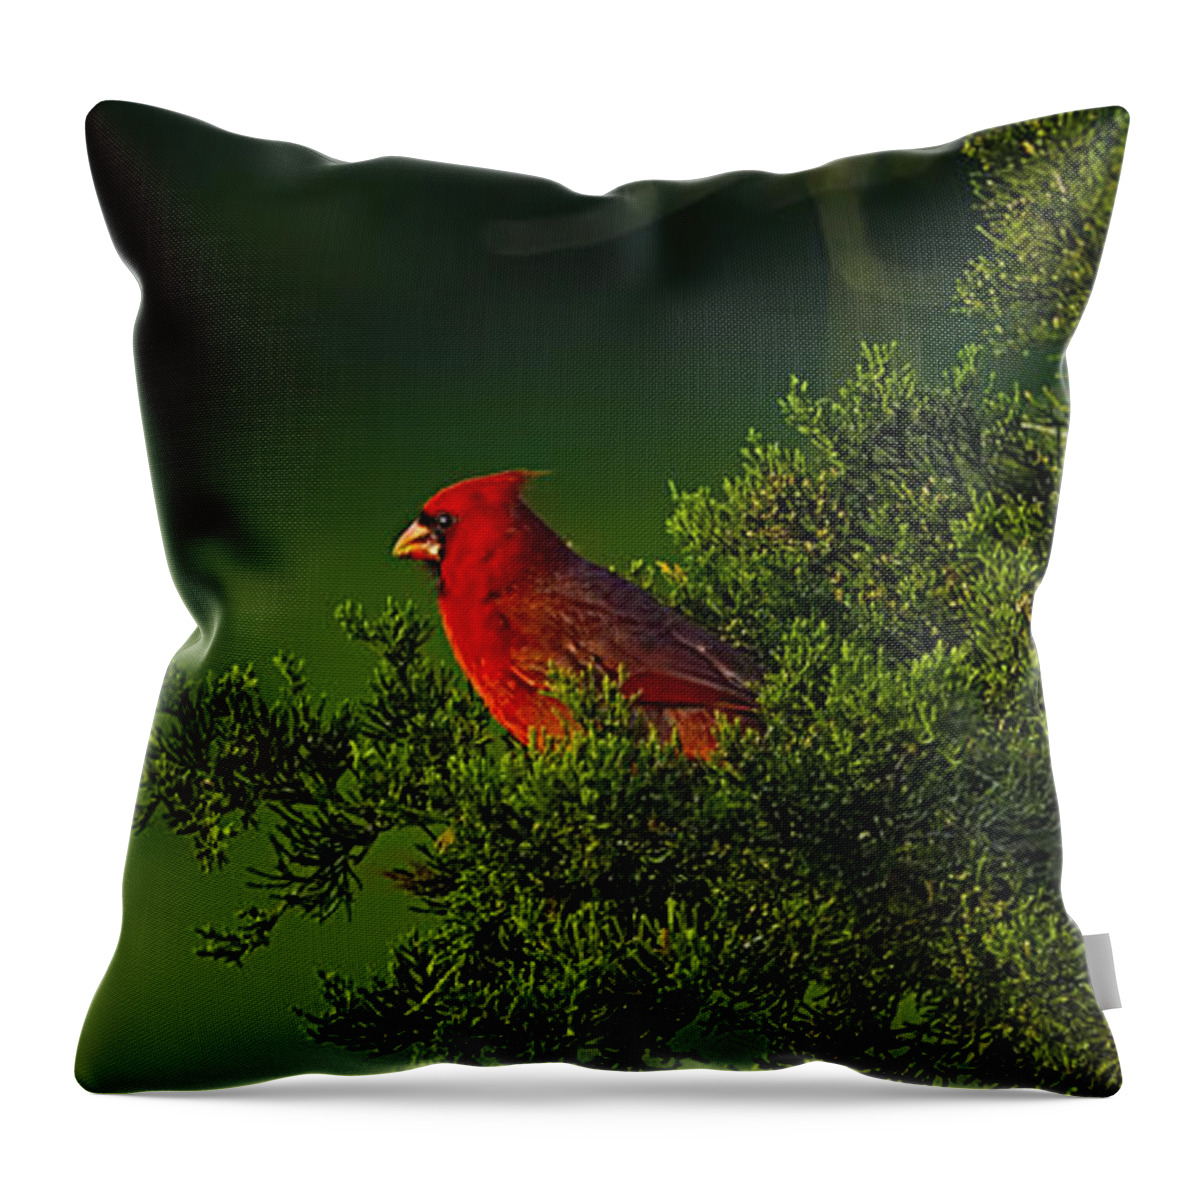 Male Cardinal Bird Throw Pillow featuring the photograph Male Cardinal in Pine Tree by Linda Tiepelman